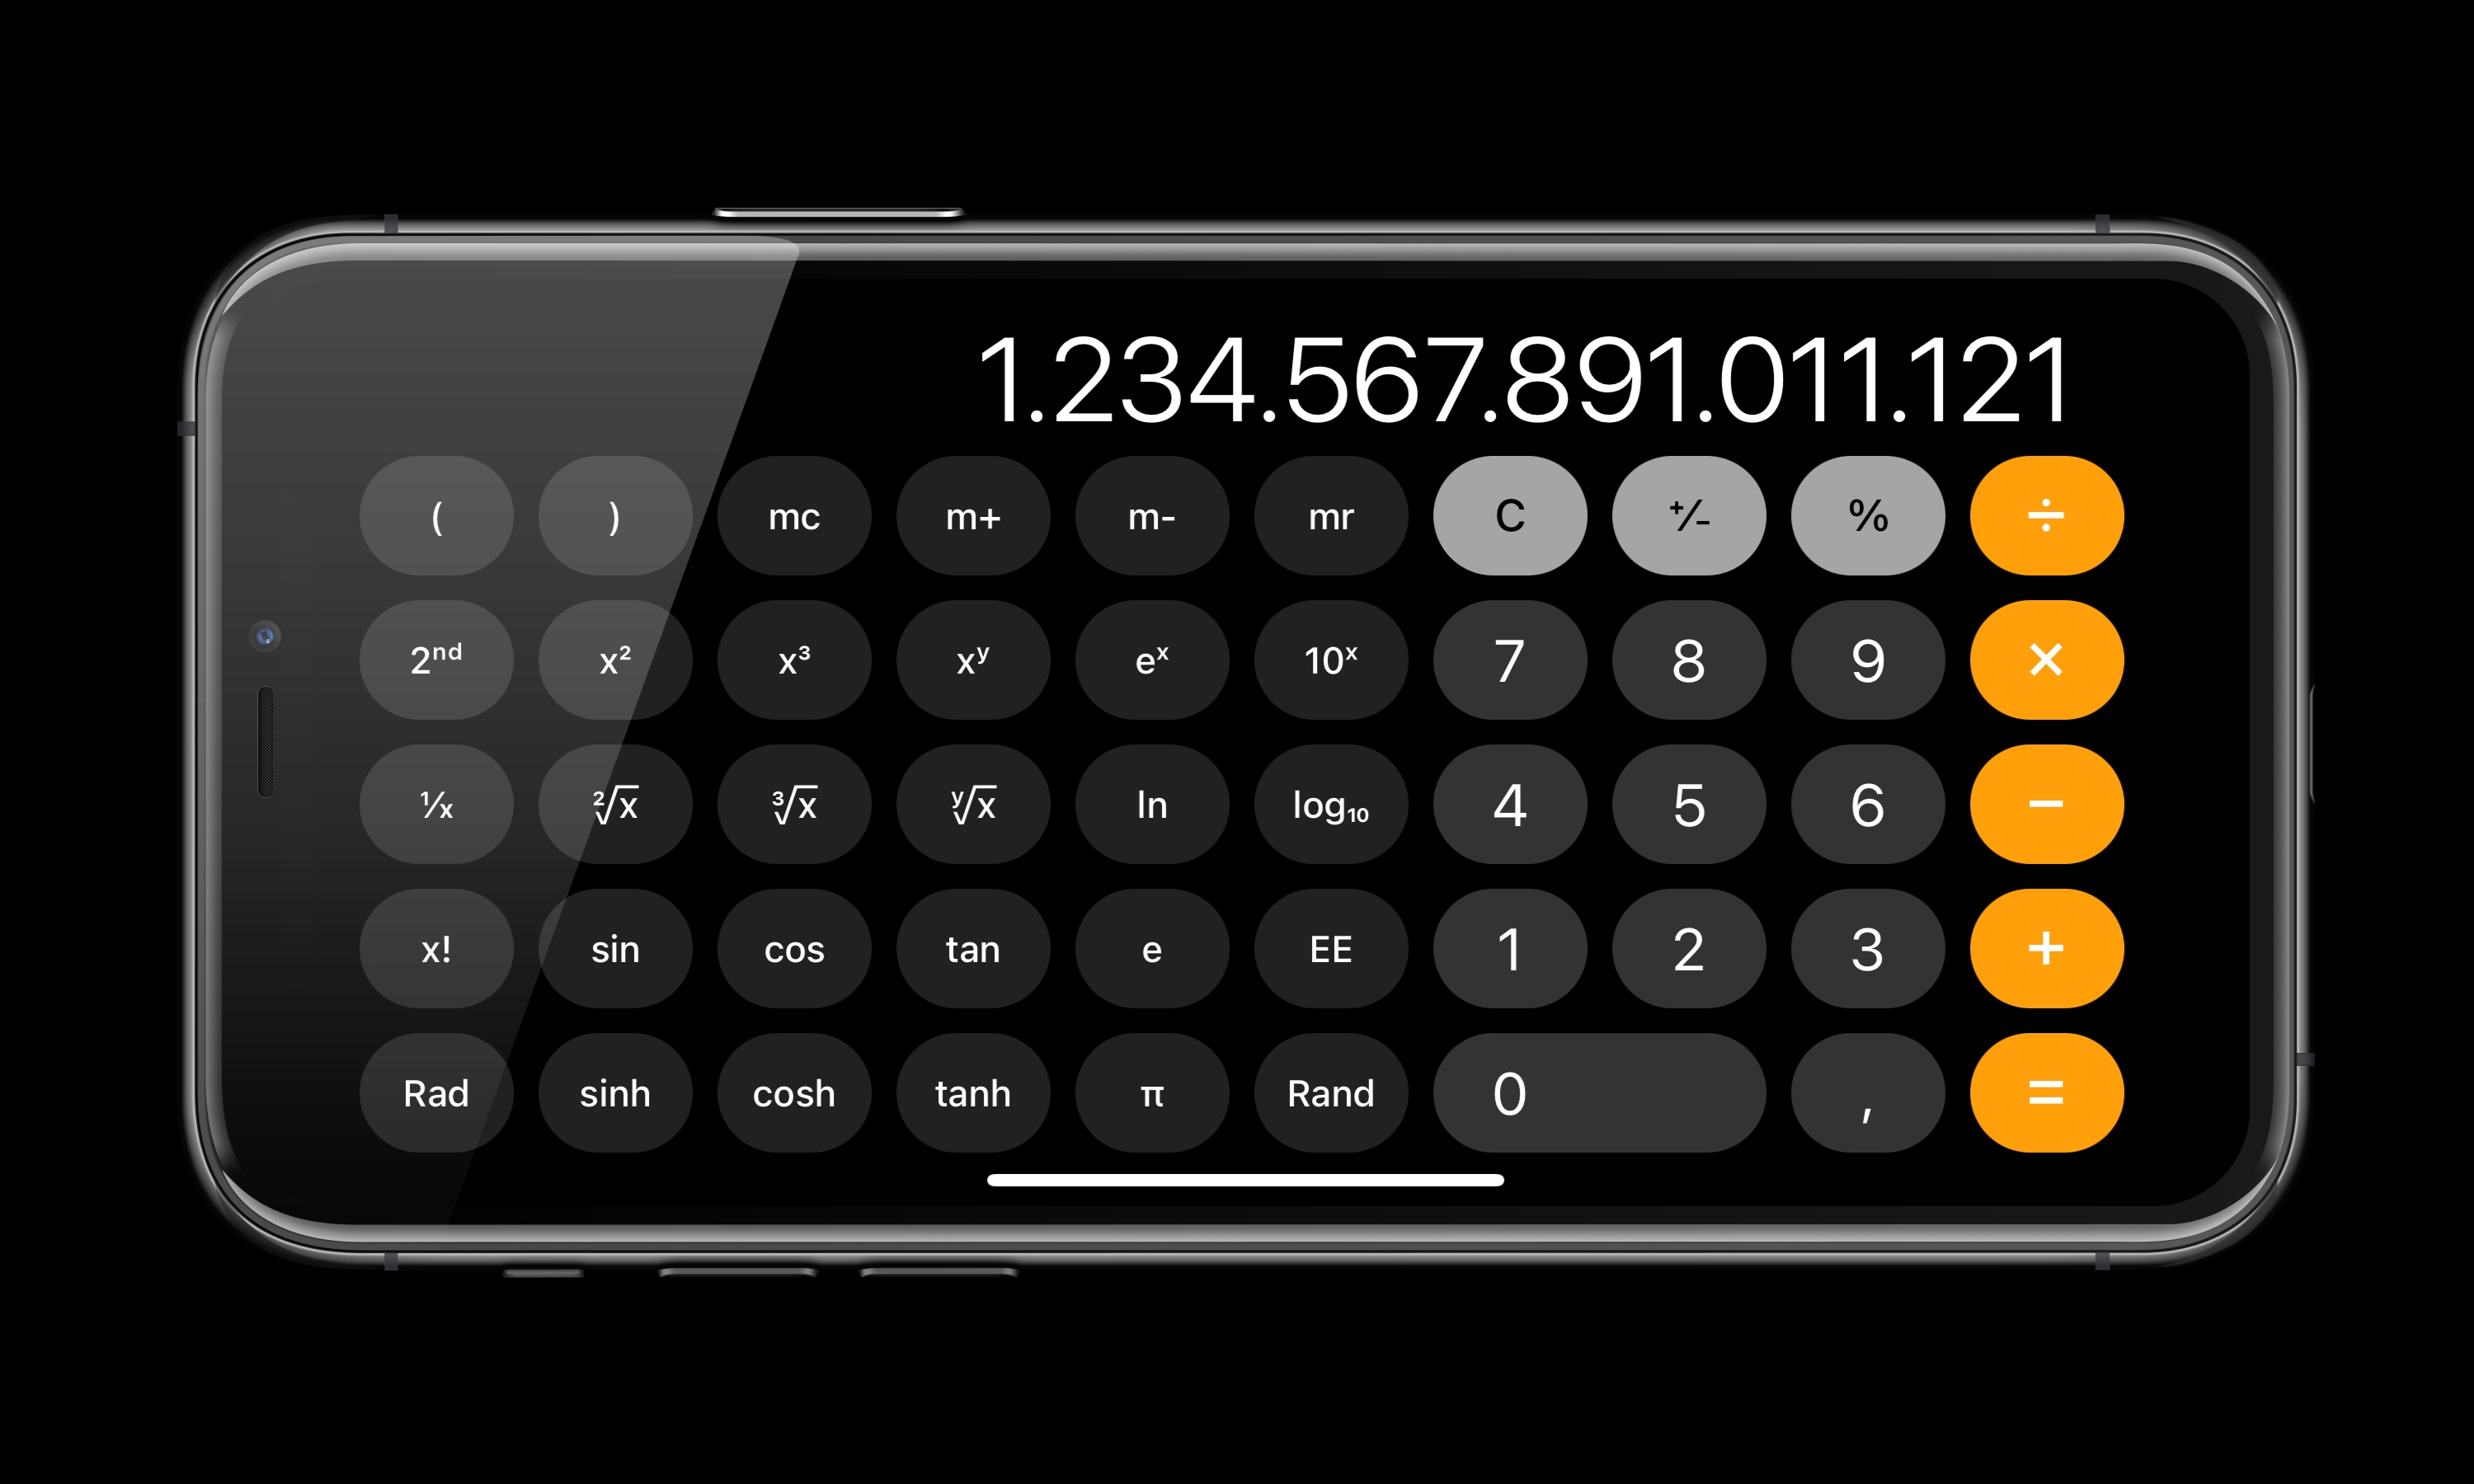 tinhte_iphone_calculator_3.jpg